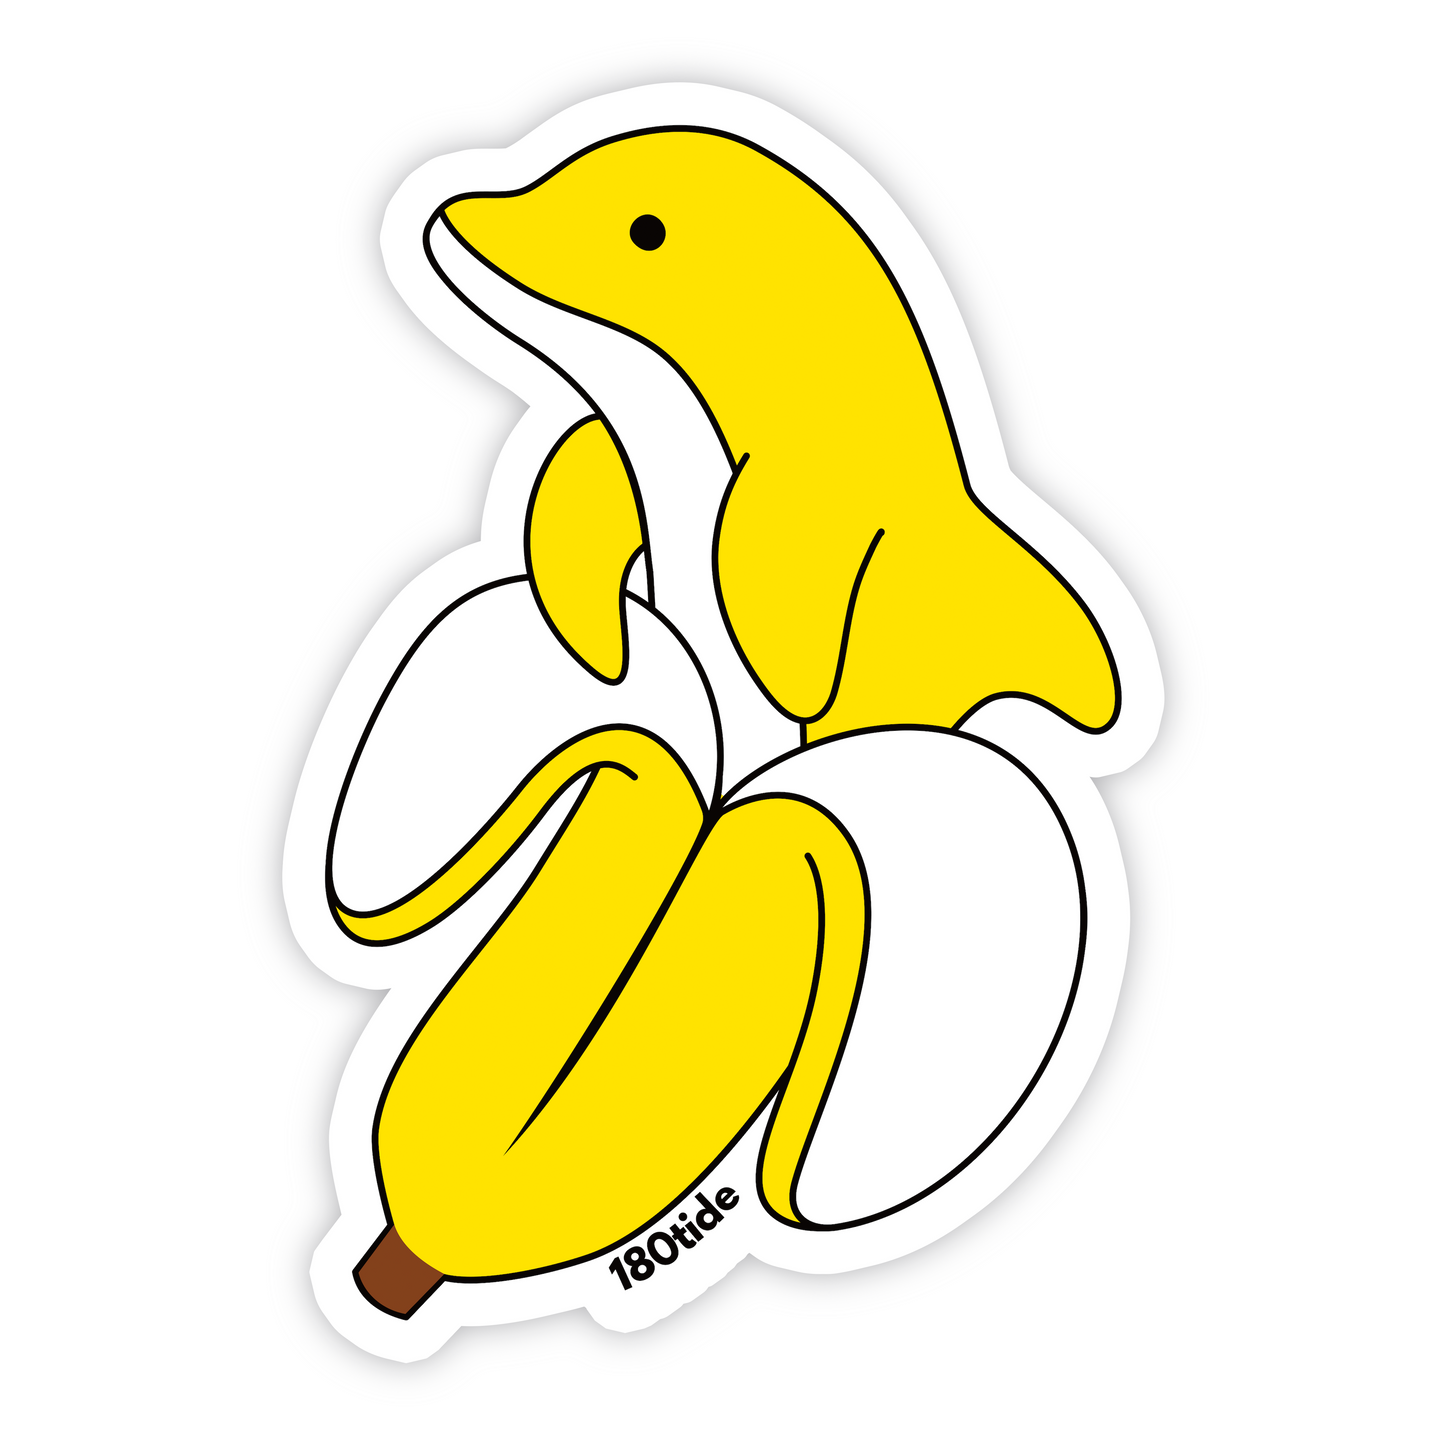 BanDan the Banana Dolphin Sticker